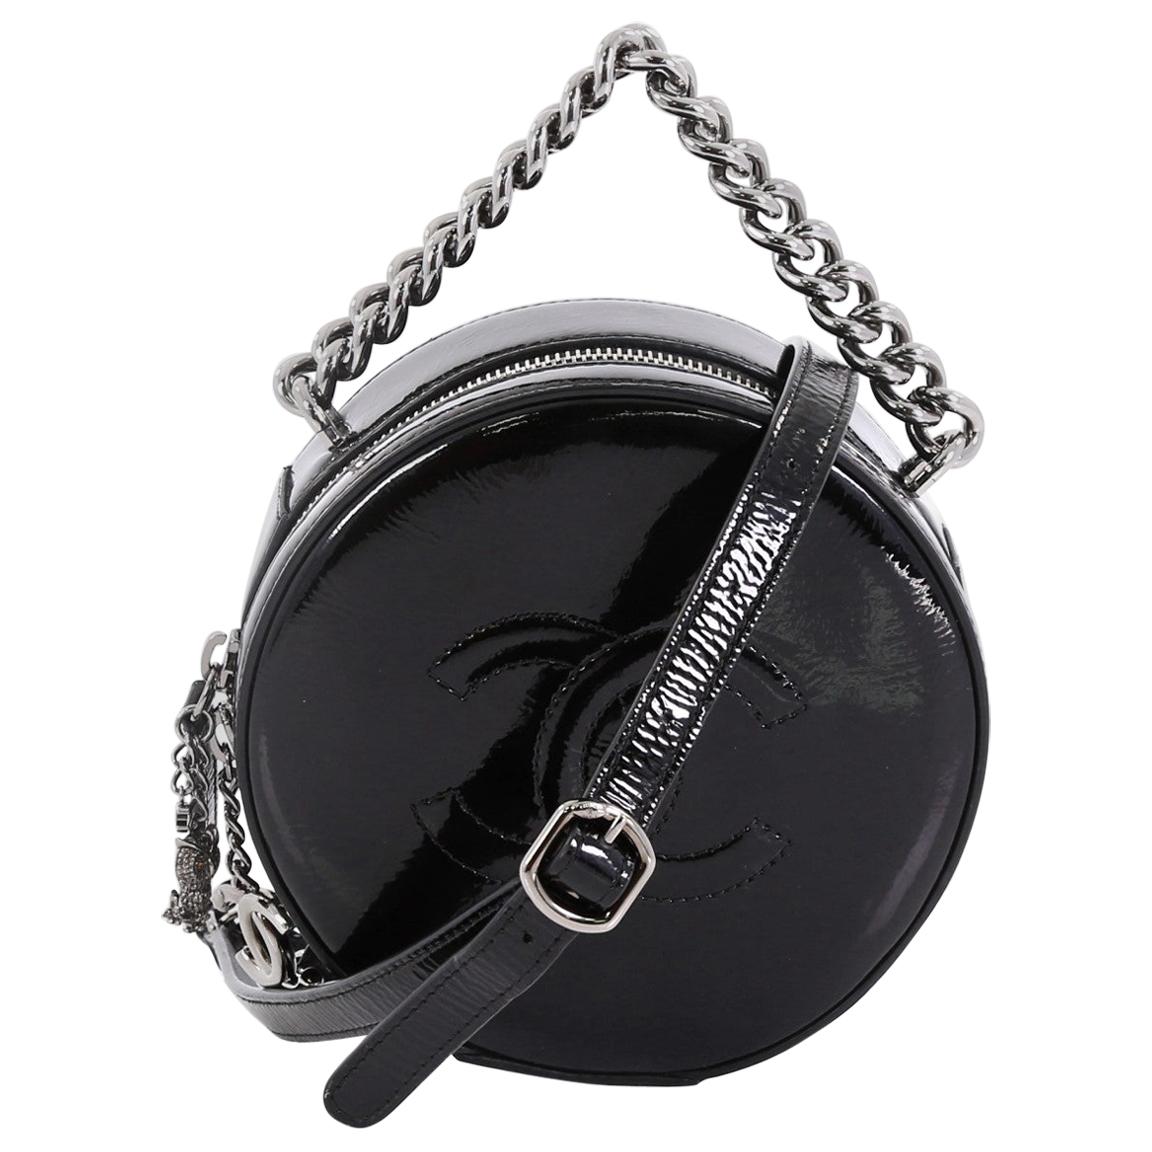 Chanel Black Round Bag